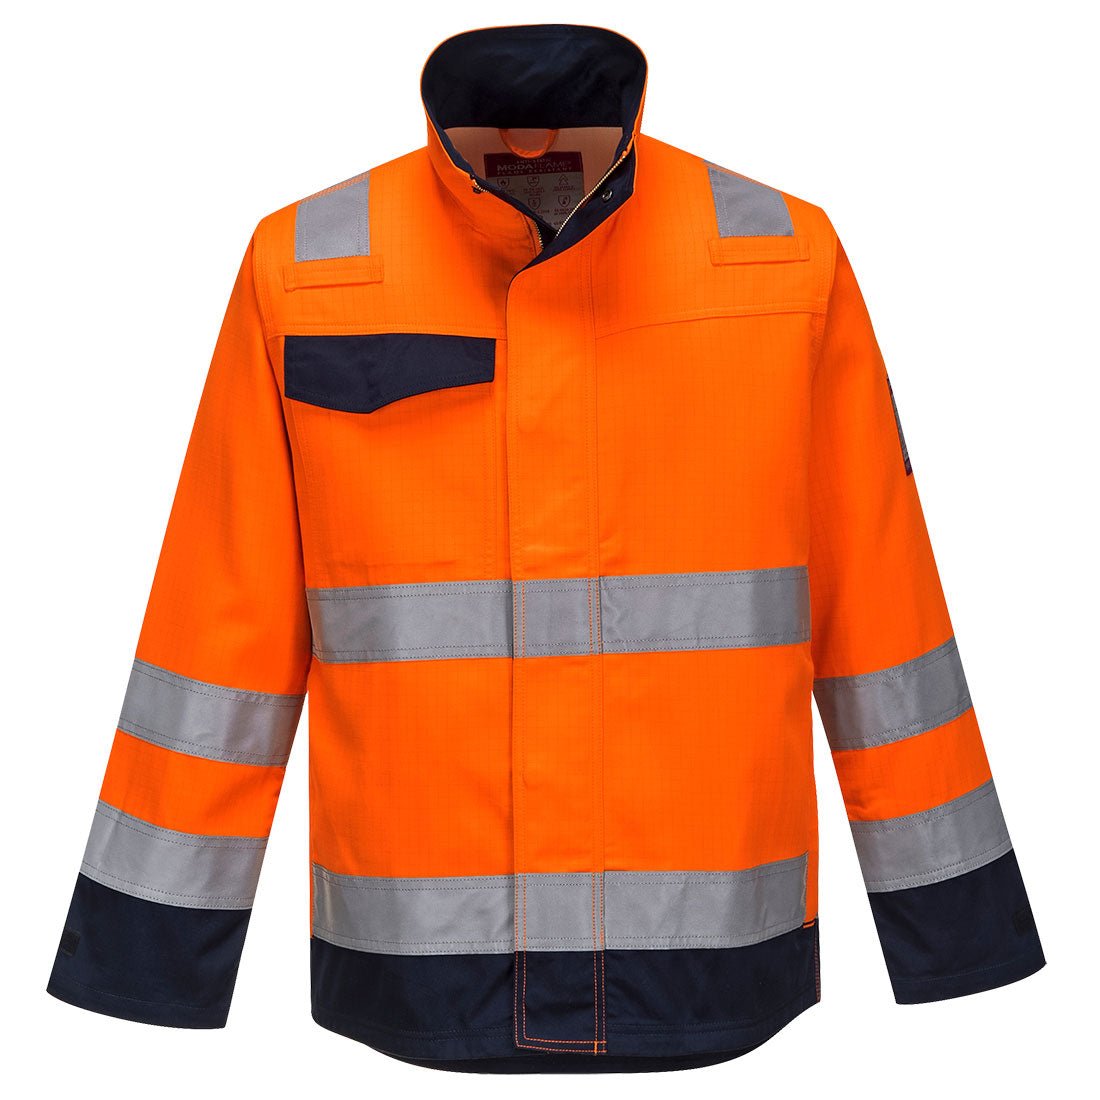 Modaflame RIS Orange/Marineblau Jacket - arbeitskleidung-gmbh